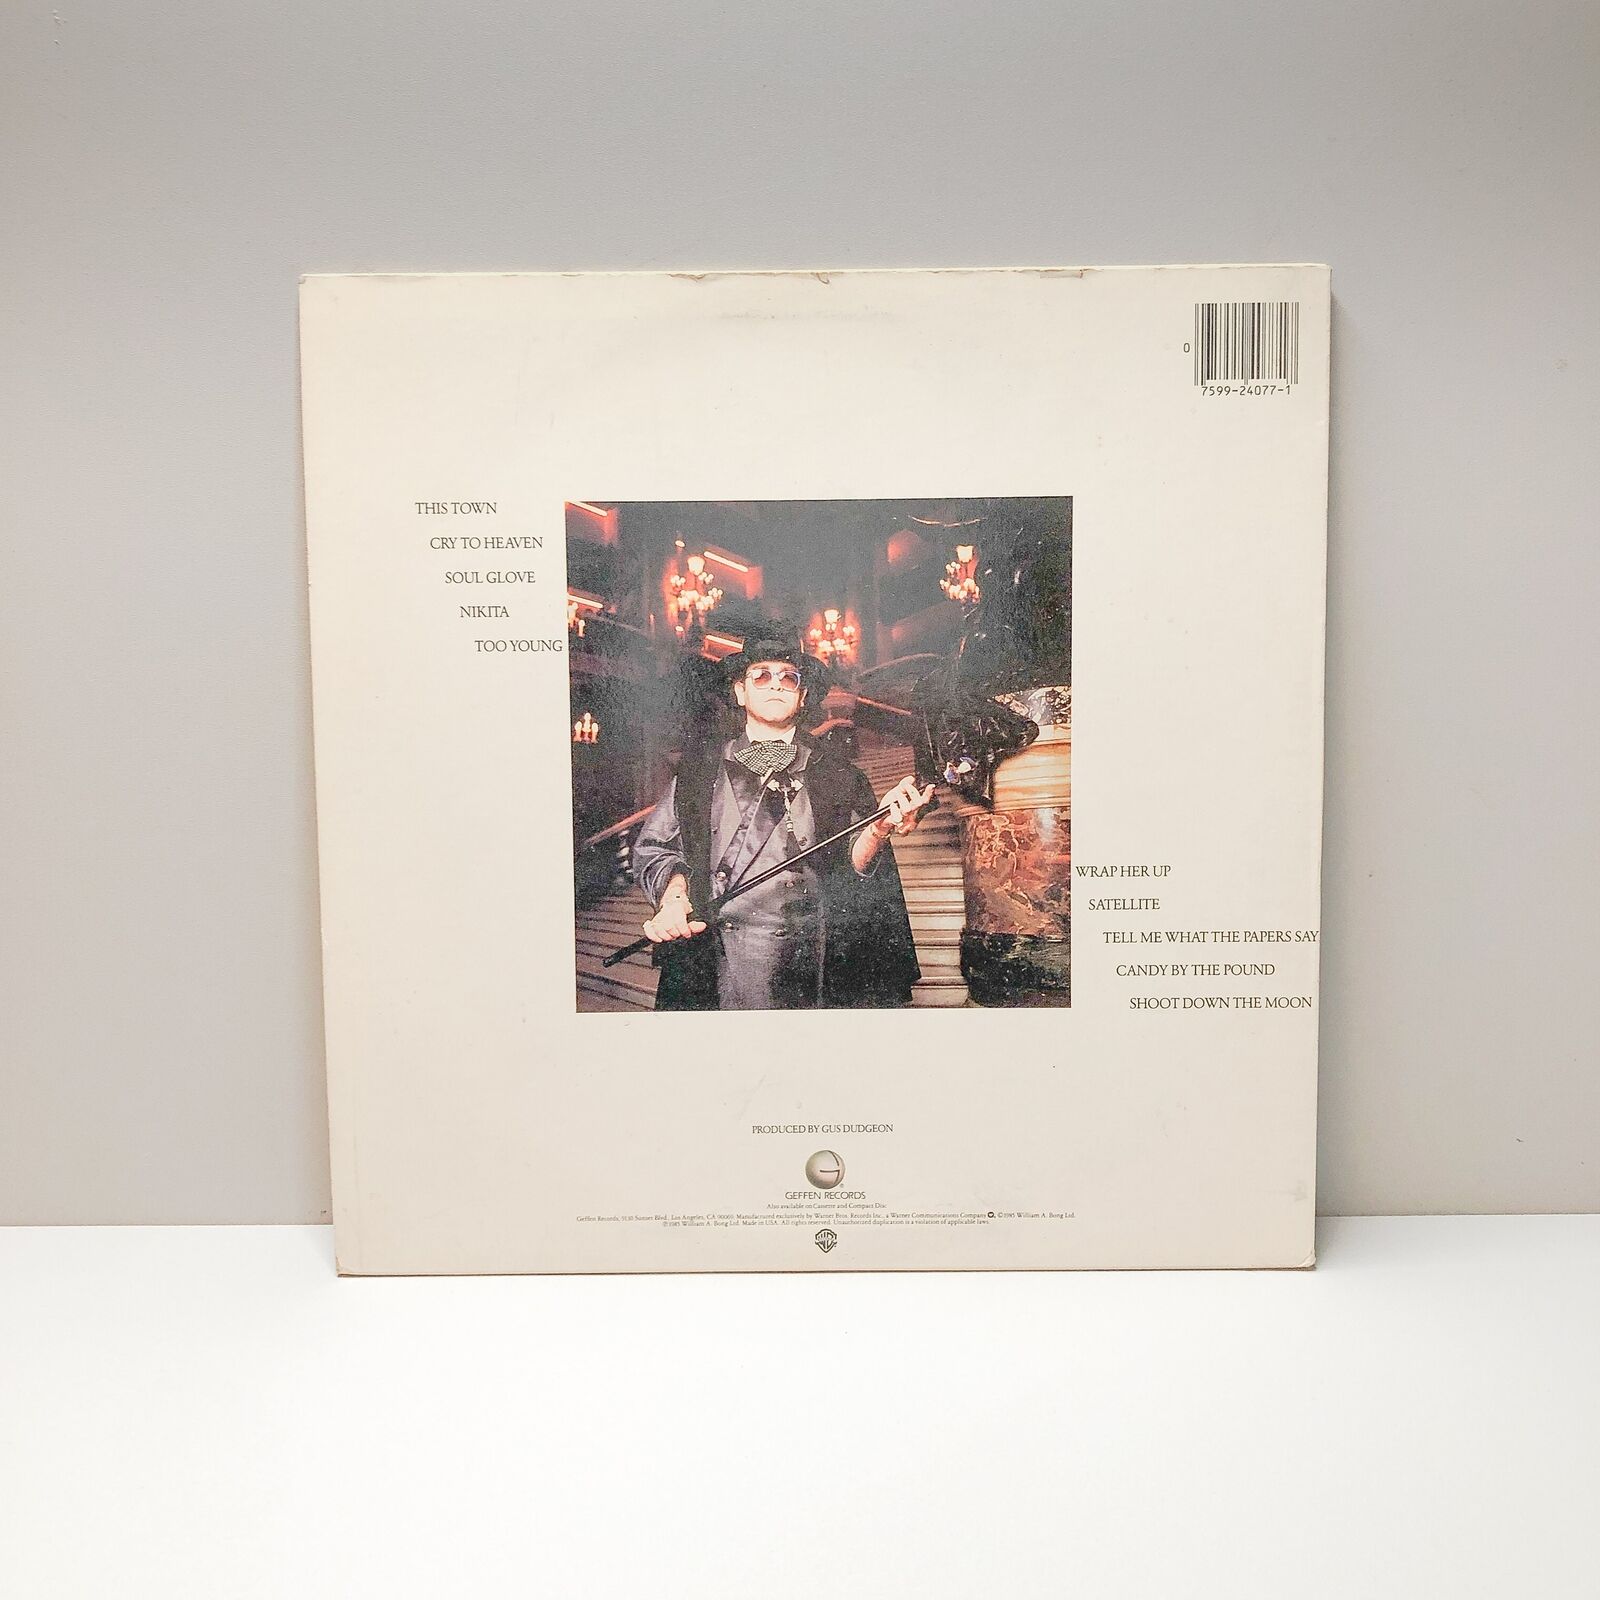 Elton John - Ice on Fire - Vinyl LP Record - 1985 (Geffen Records)